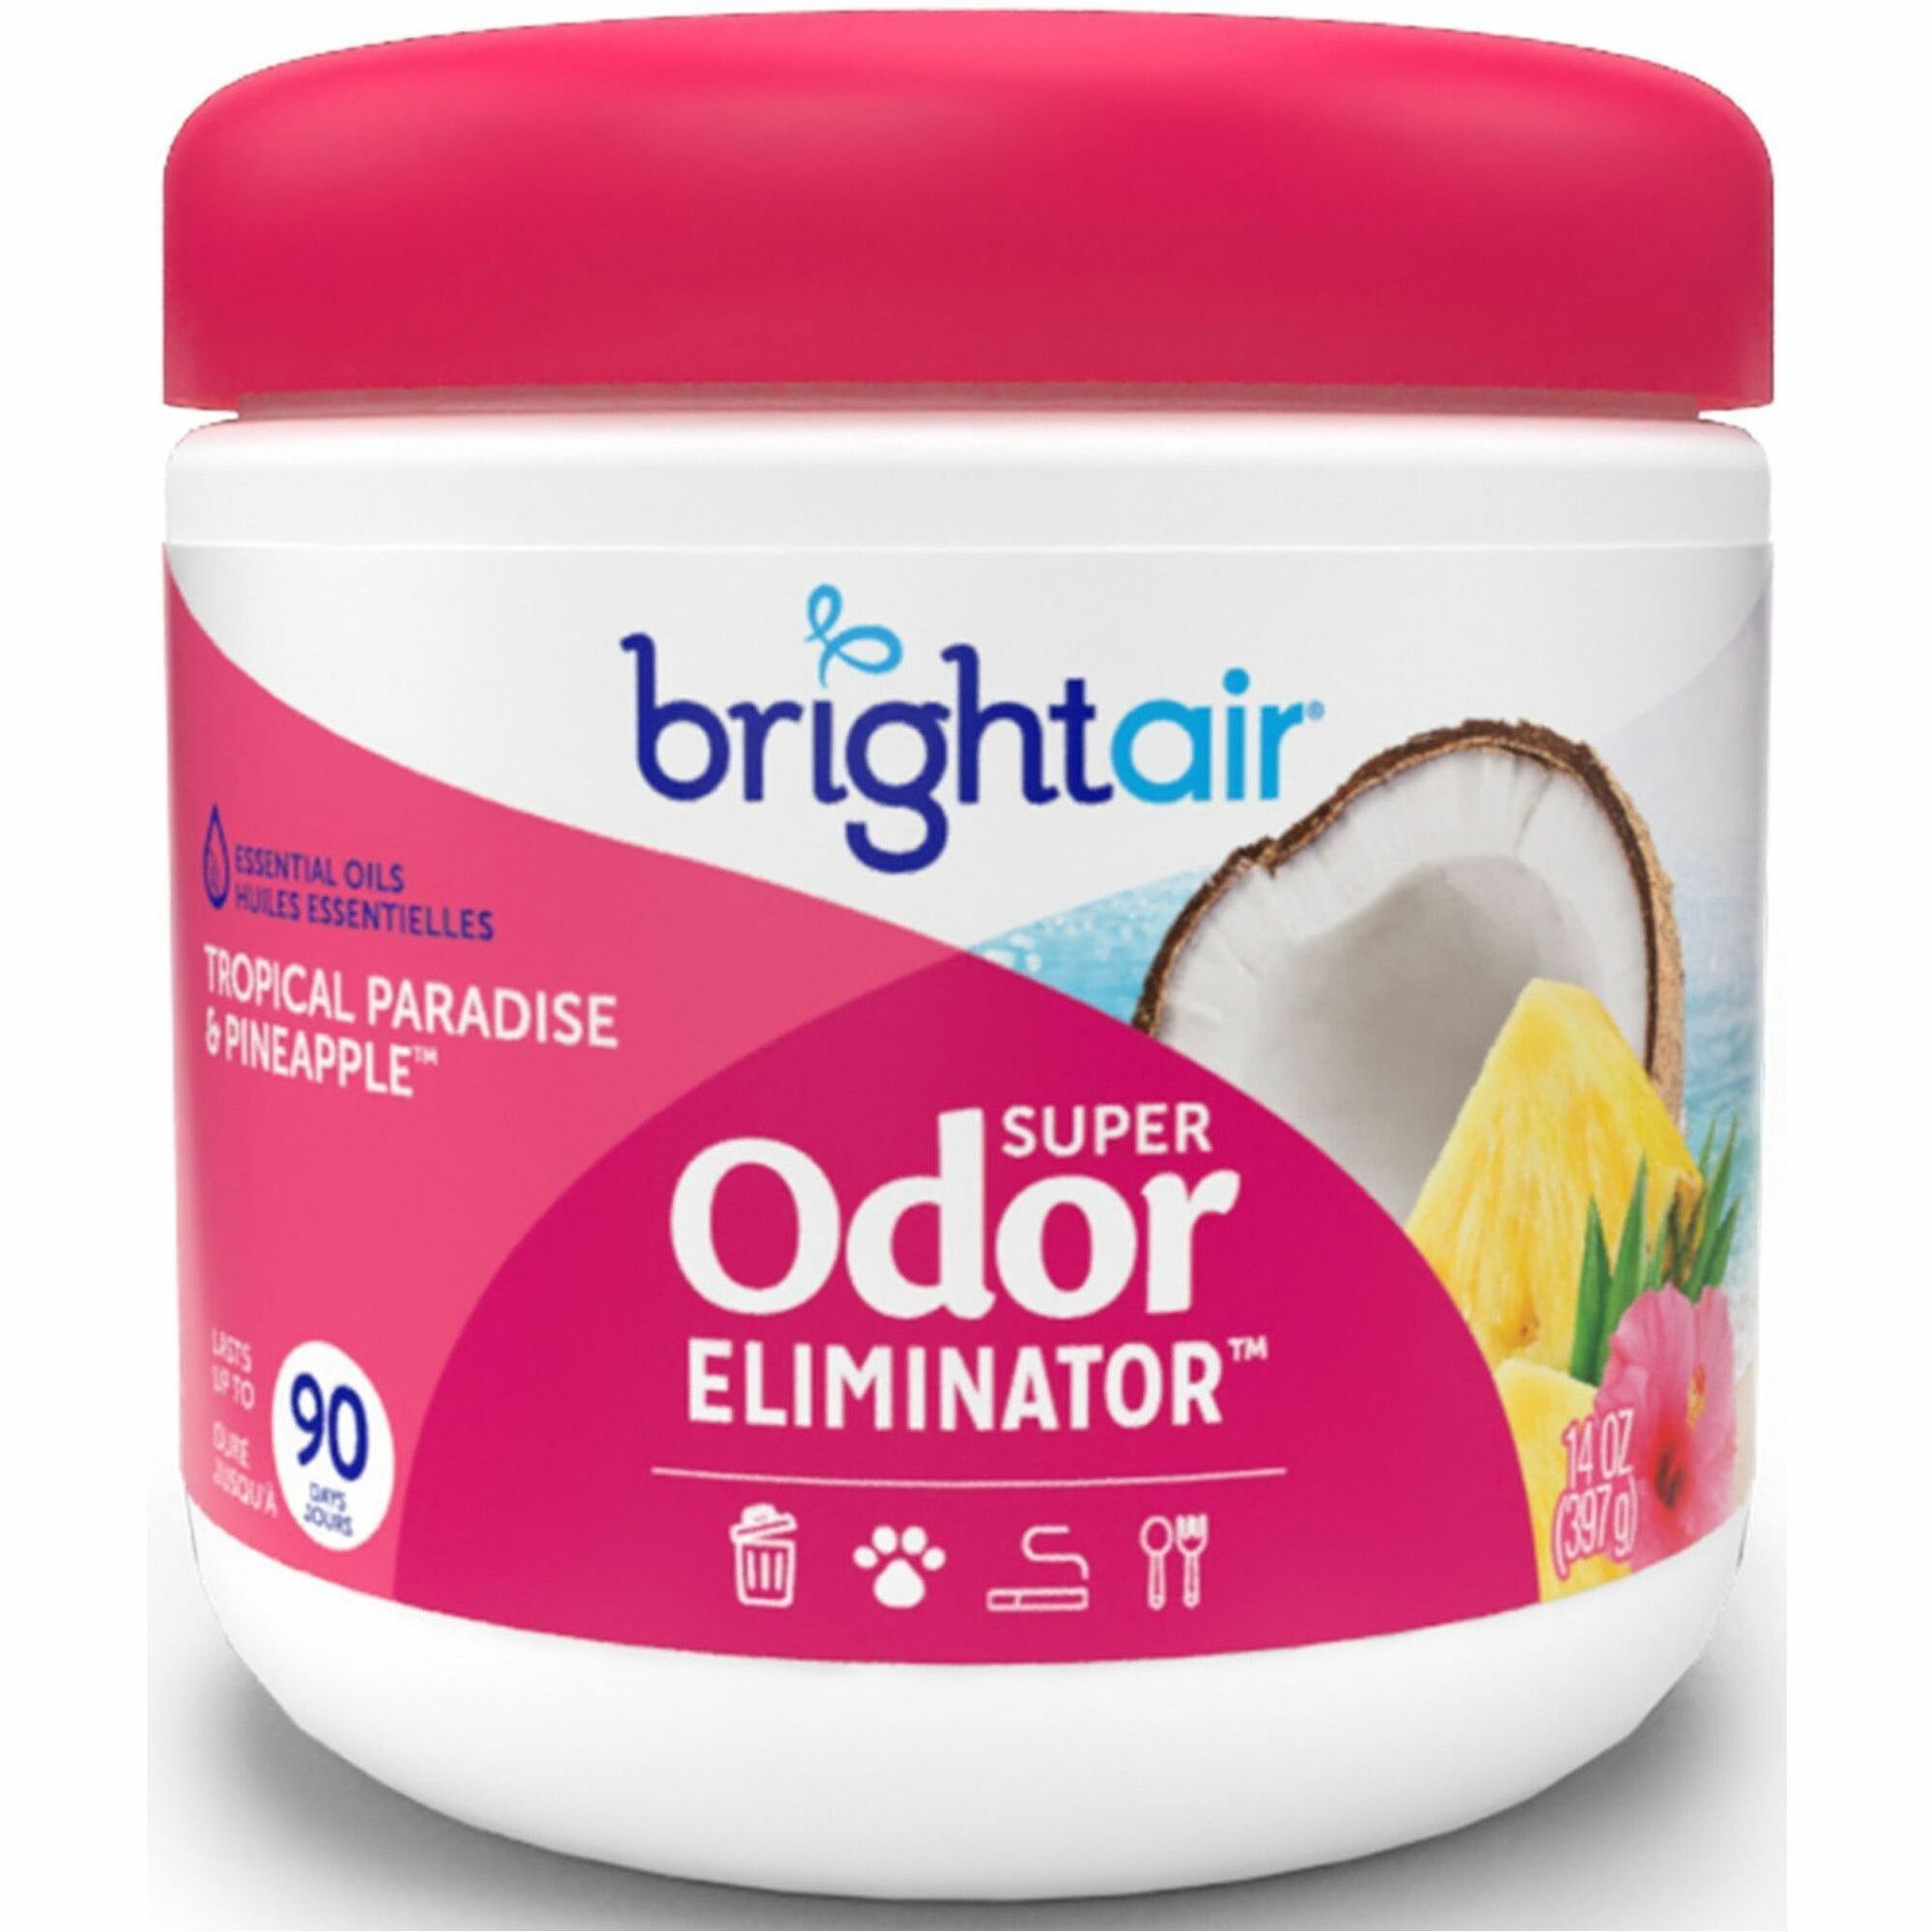 Bright Air Super Odor Eliminator Air Freshener - 14 fl oz (0.4 quart) - Tropical Paradise & Pineapple - 90 Day - 1 Each - Cruelty-free, Phthalate-free, Triclosan-free, BHT Free - 1